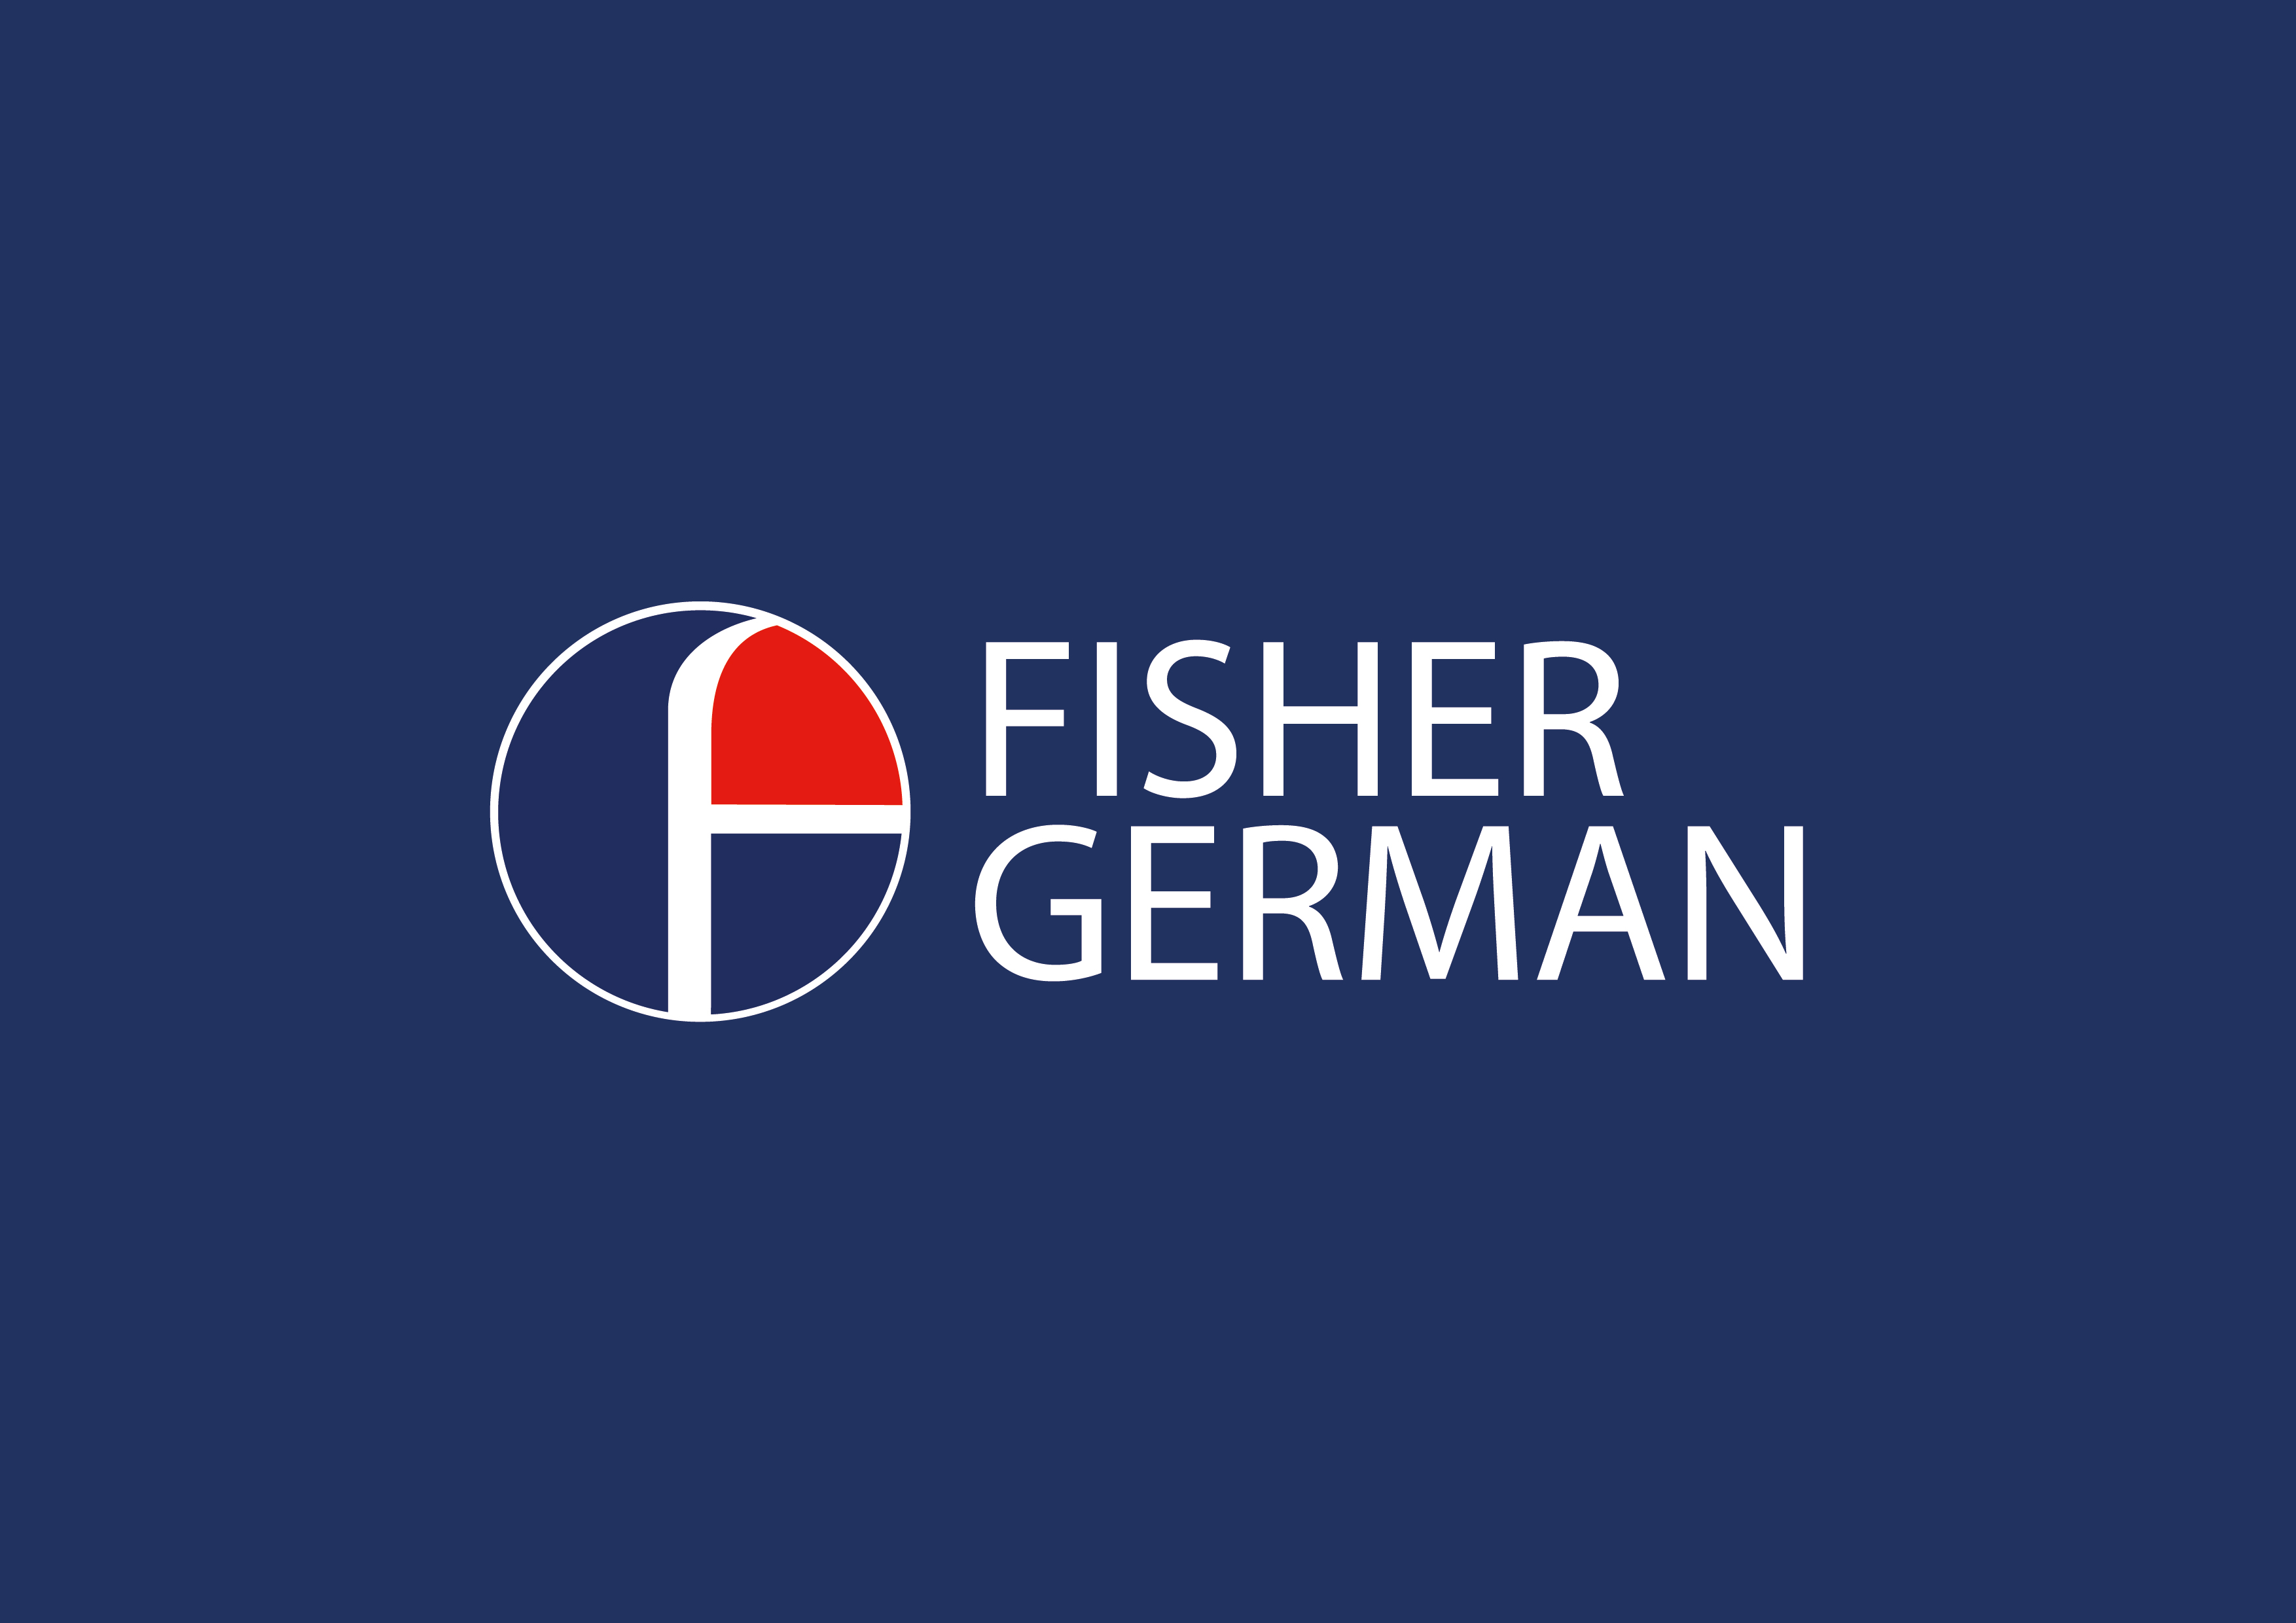 Fisher German   blue logo 01